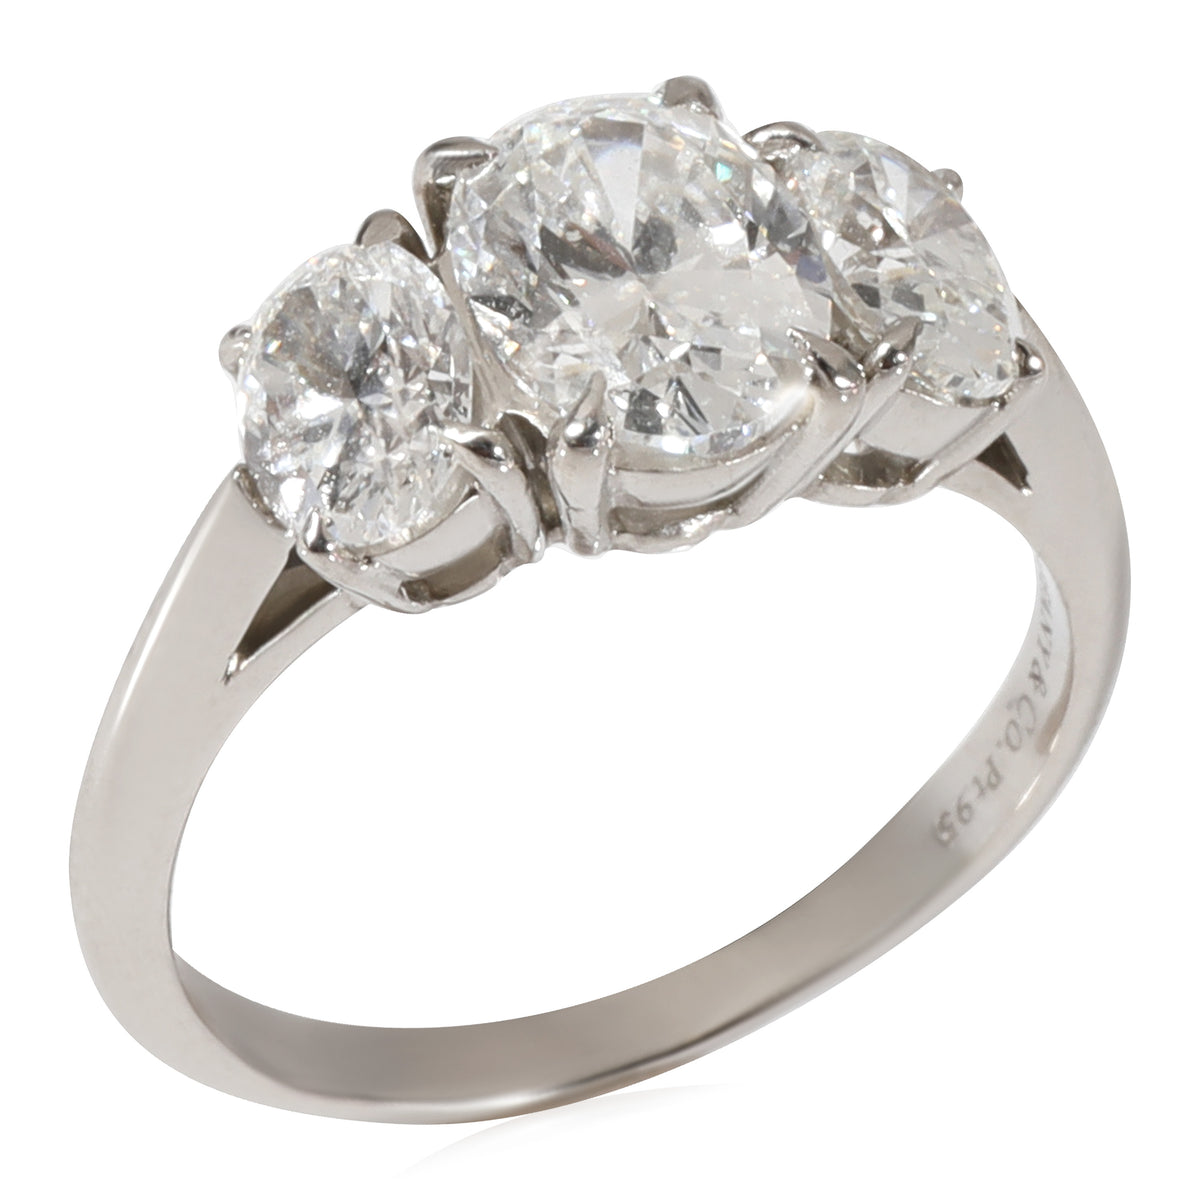 Tiffany & Co. Three Stone Diamond Engagement Ring in Platinum E VS1 1.70 CTW